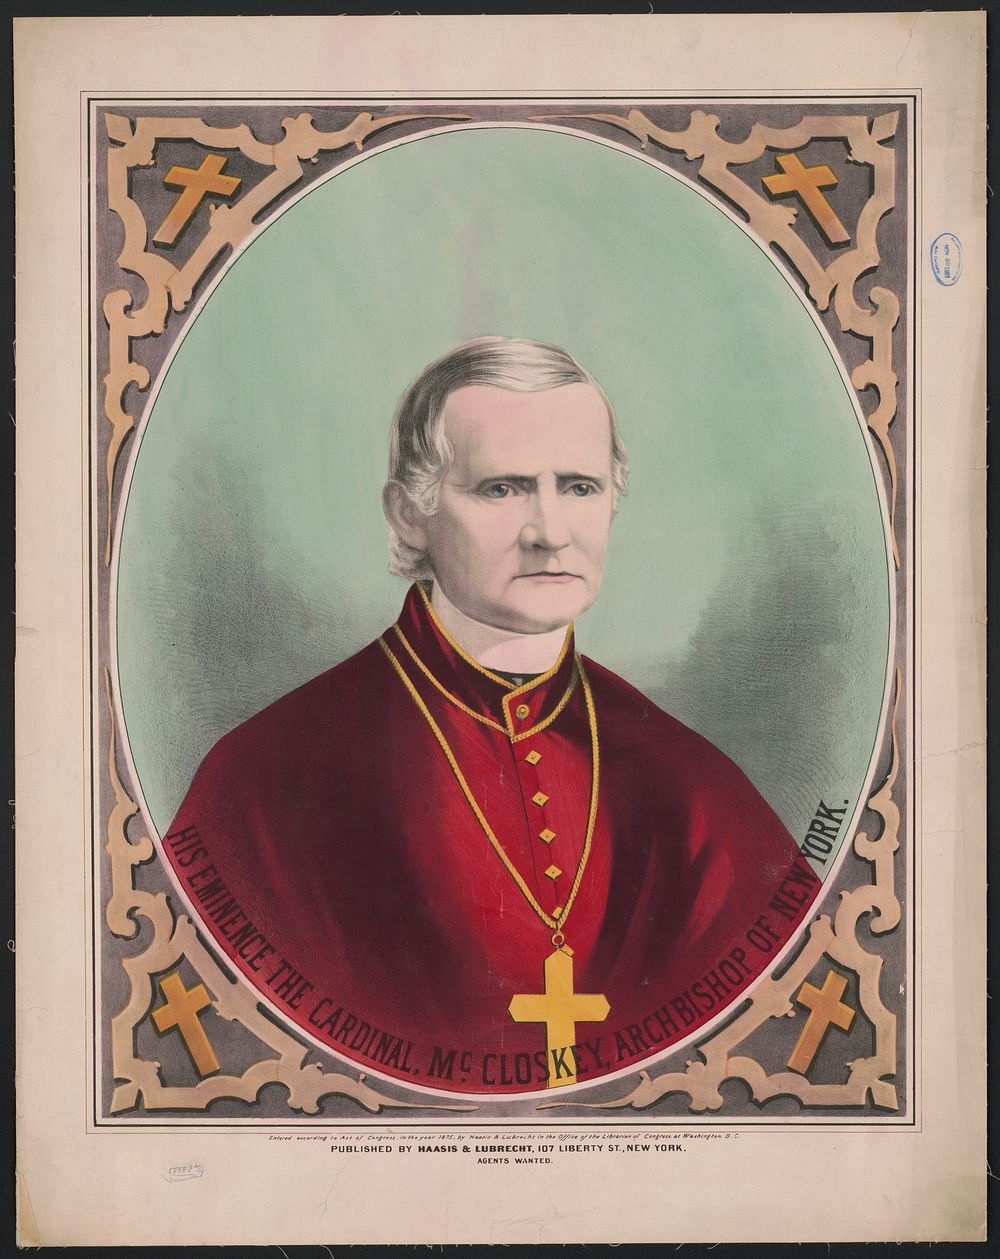 His eminence the Cardinal McCloskey, Archbishop of New York